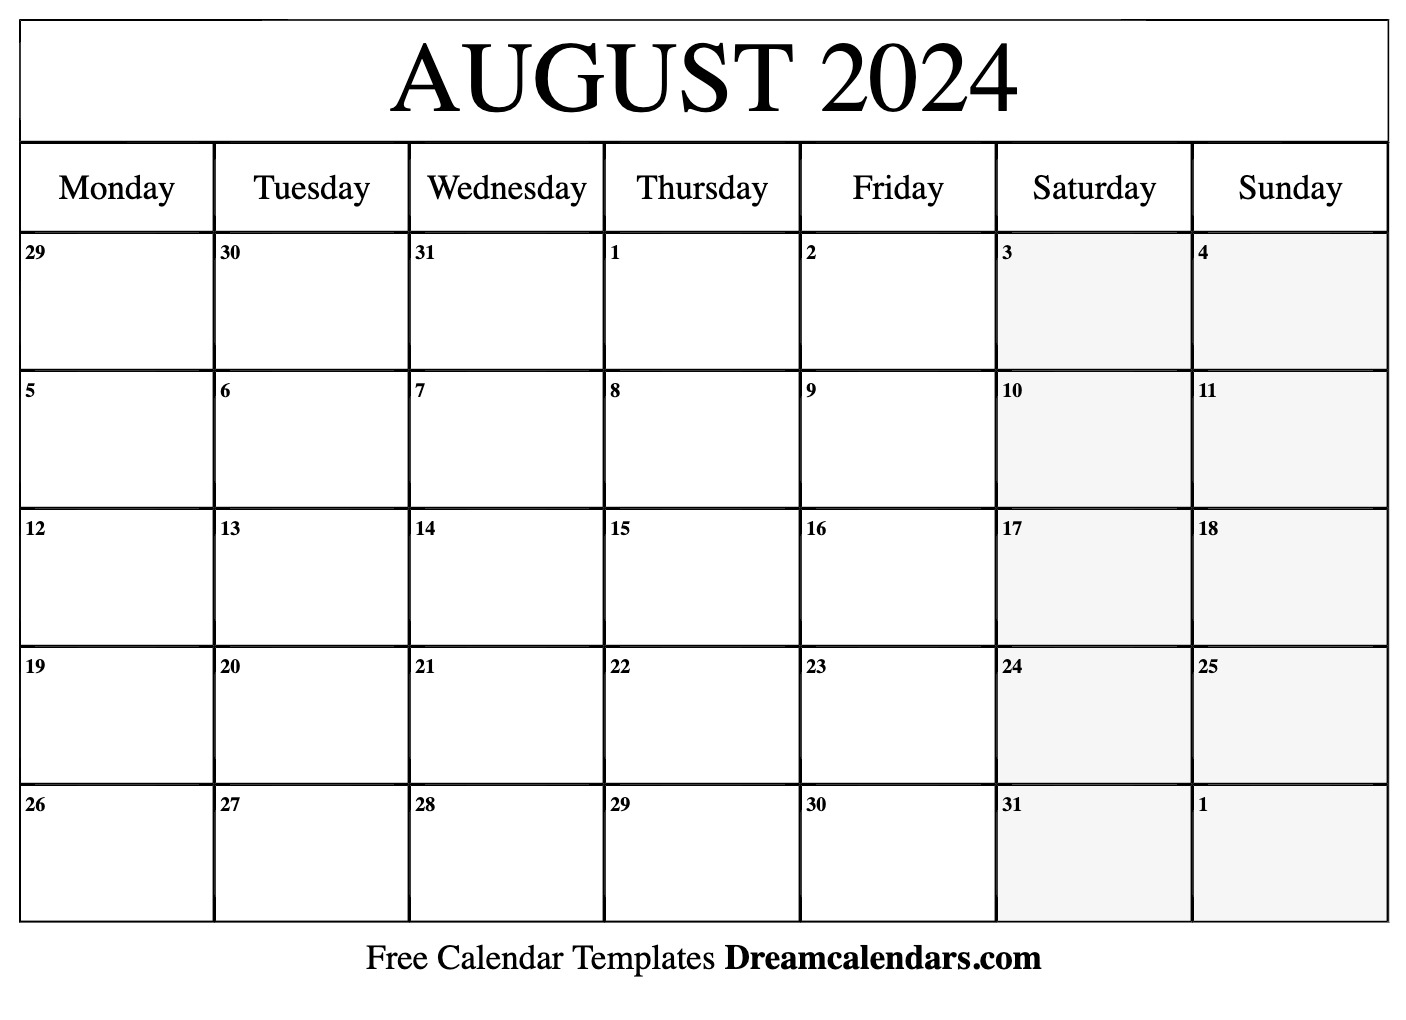 August 2024 Calendar | Free Blank Printable With Holidays for Aug 2024 Calendar Printable